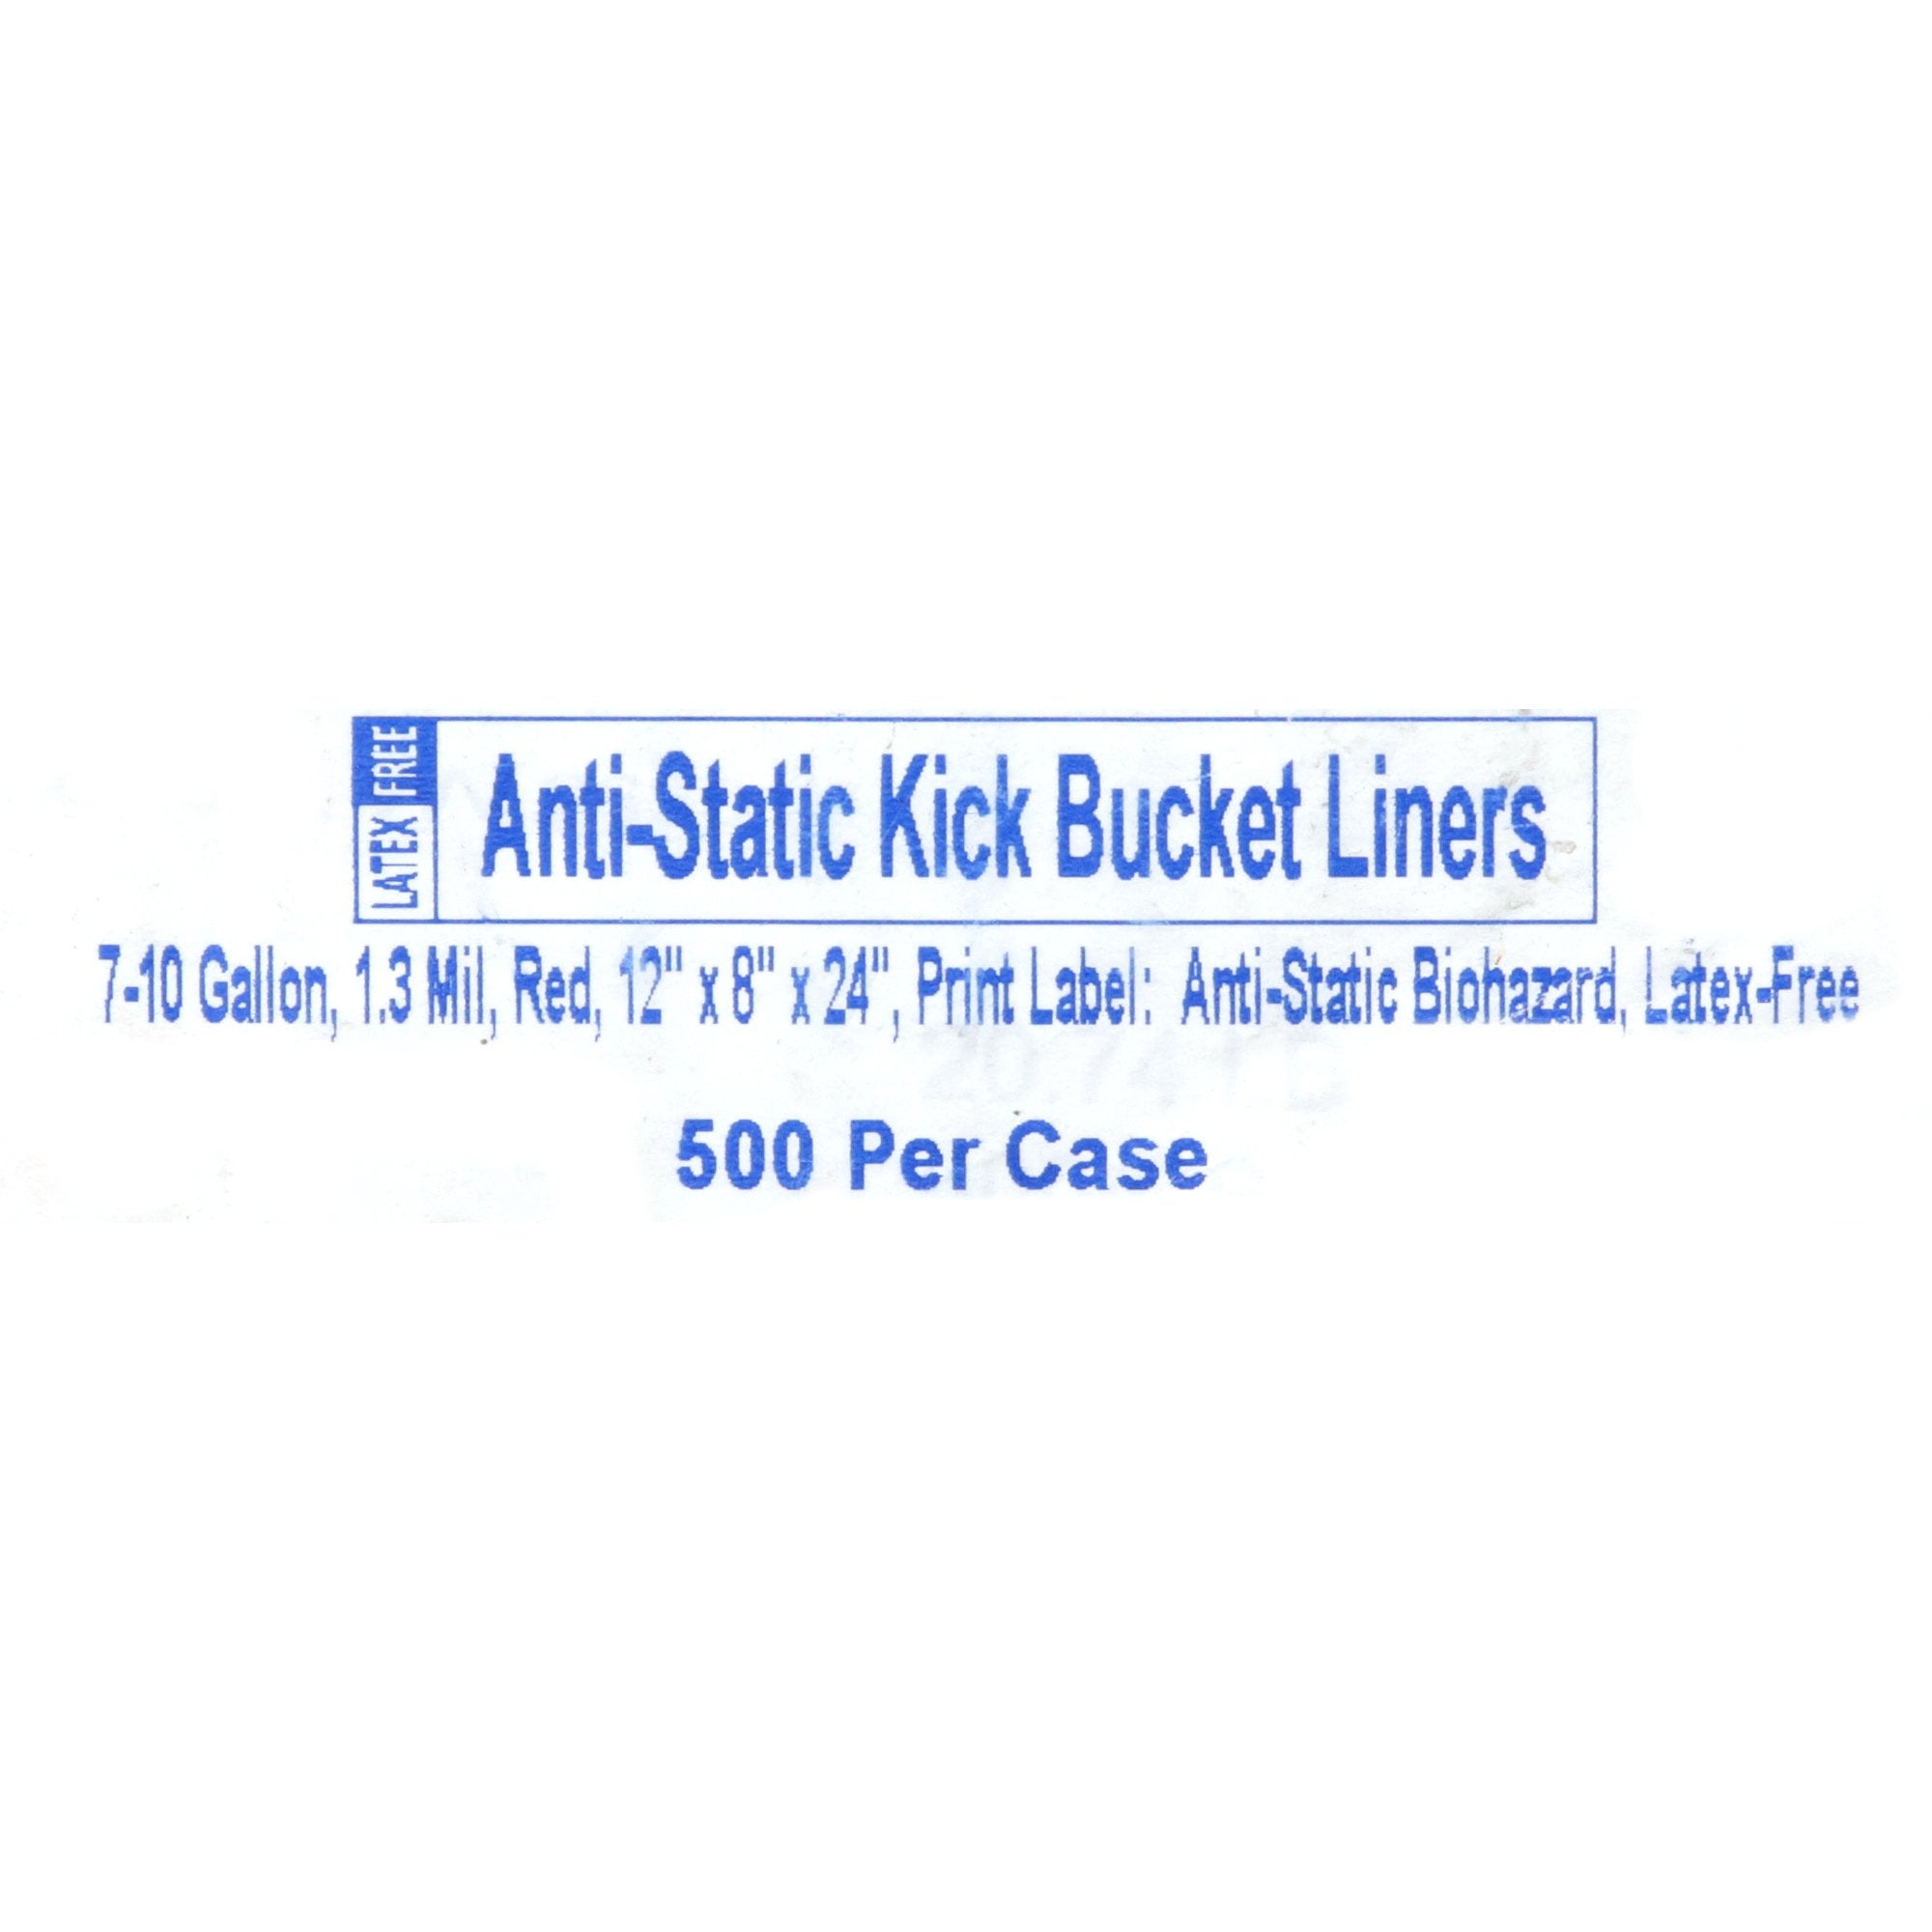 Kick Bucket Liner McKesson 7 to 10 gal. Red Bag 8 X 12 X 24 Inch